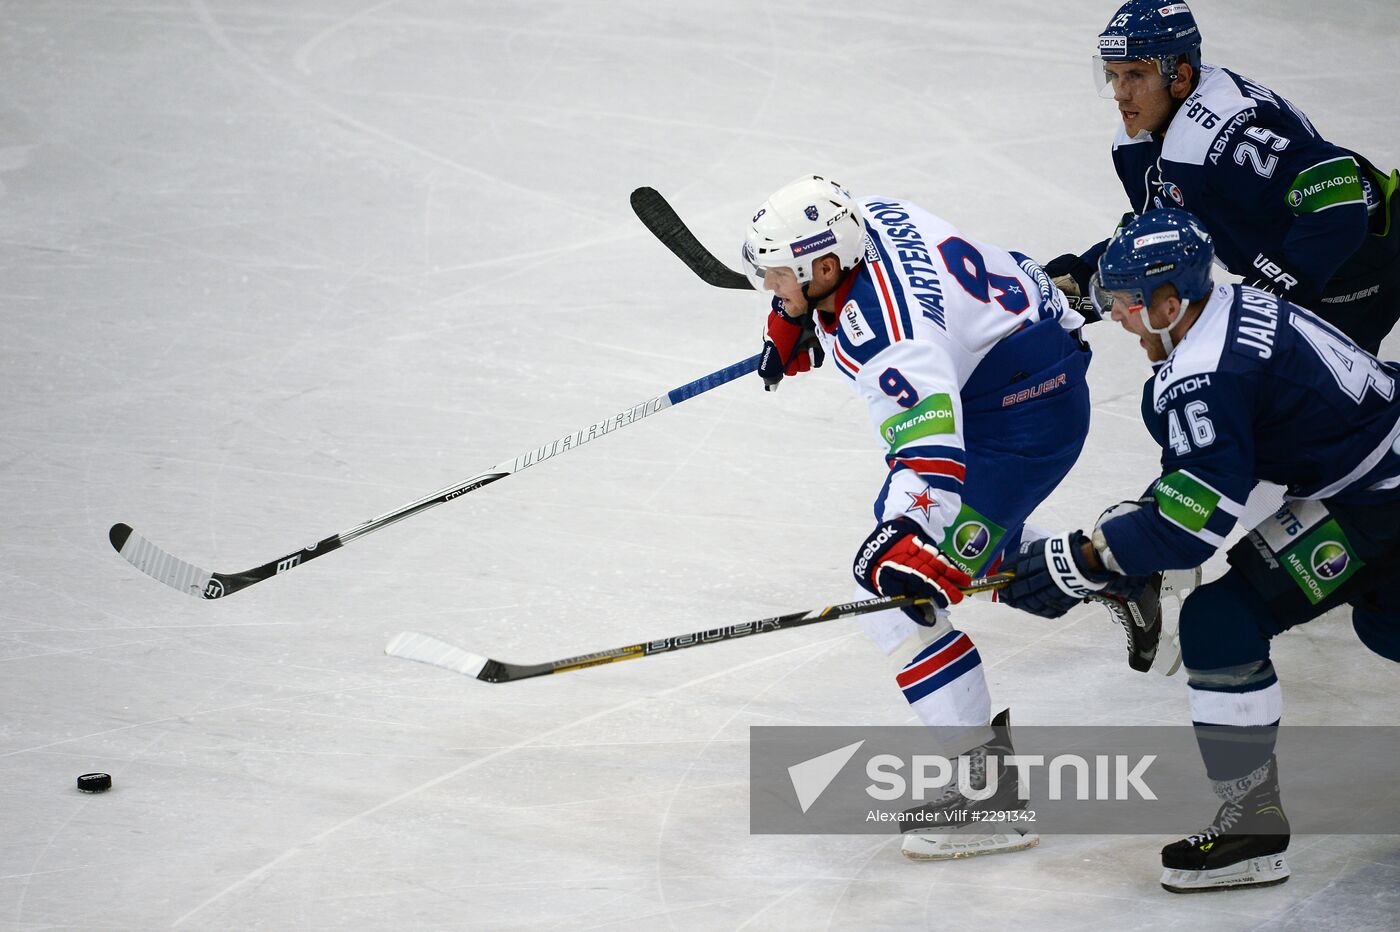 Kontinental Hockey League. Dynamo Moscow vs. SKA St. Petersburg